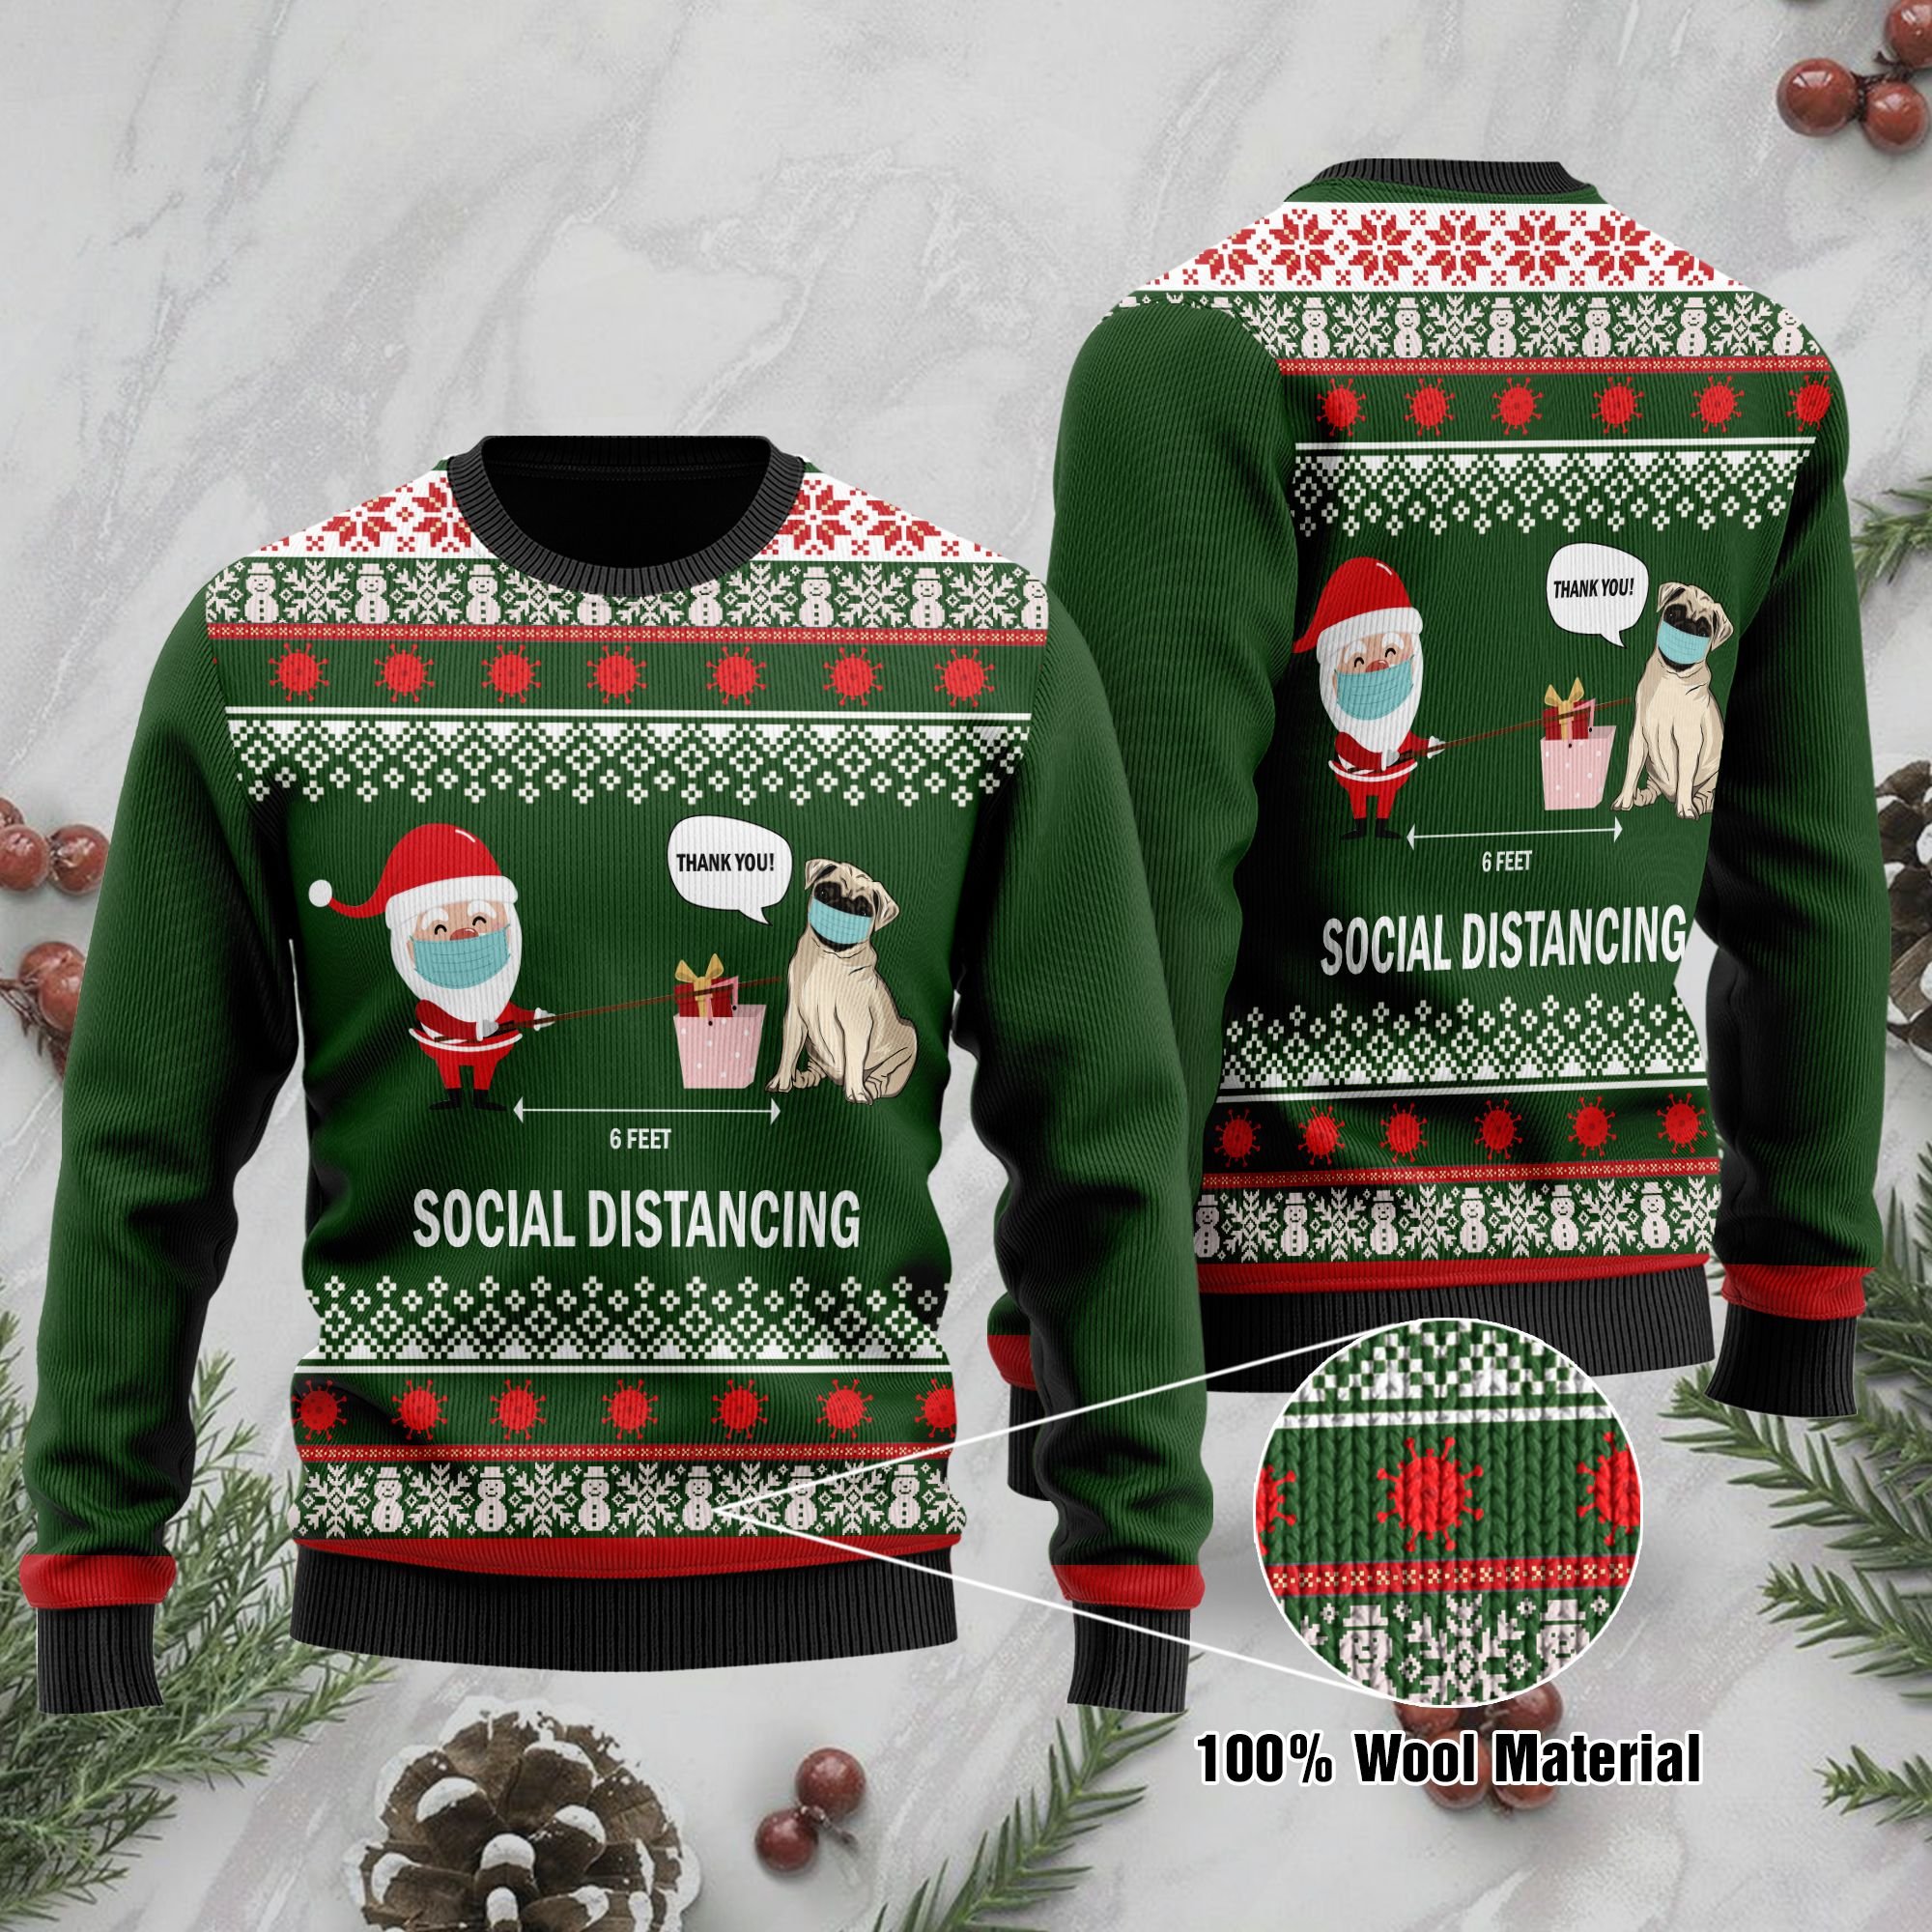 6 Feet Social Distancing Pug And Santa Claus Ugly Sweater